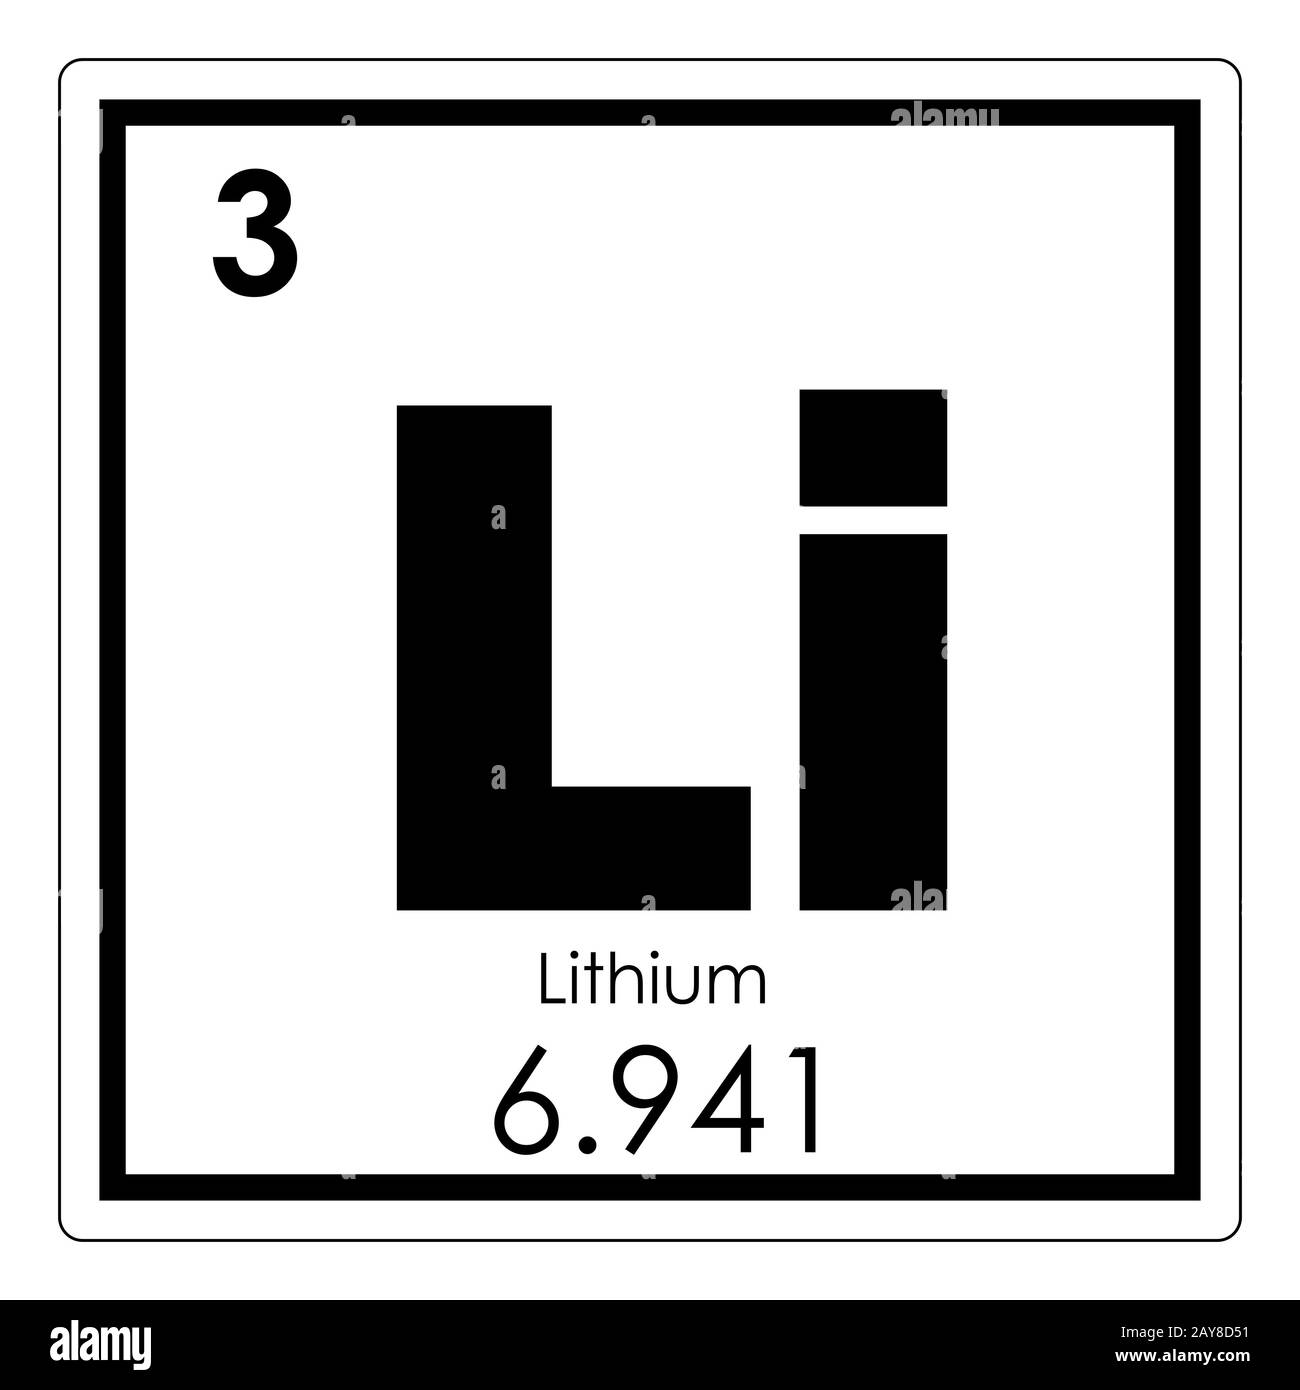 Lithium chemical element Stock Photo